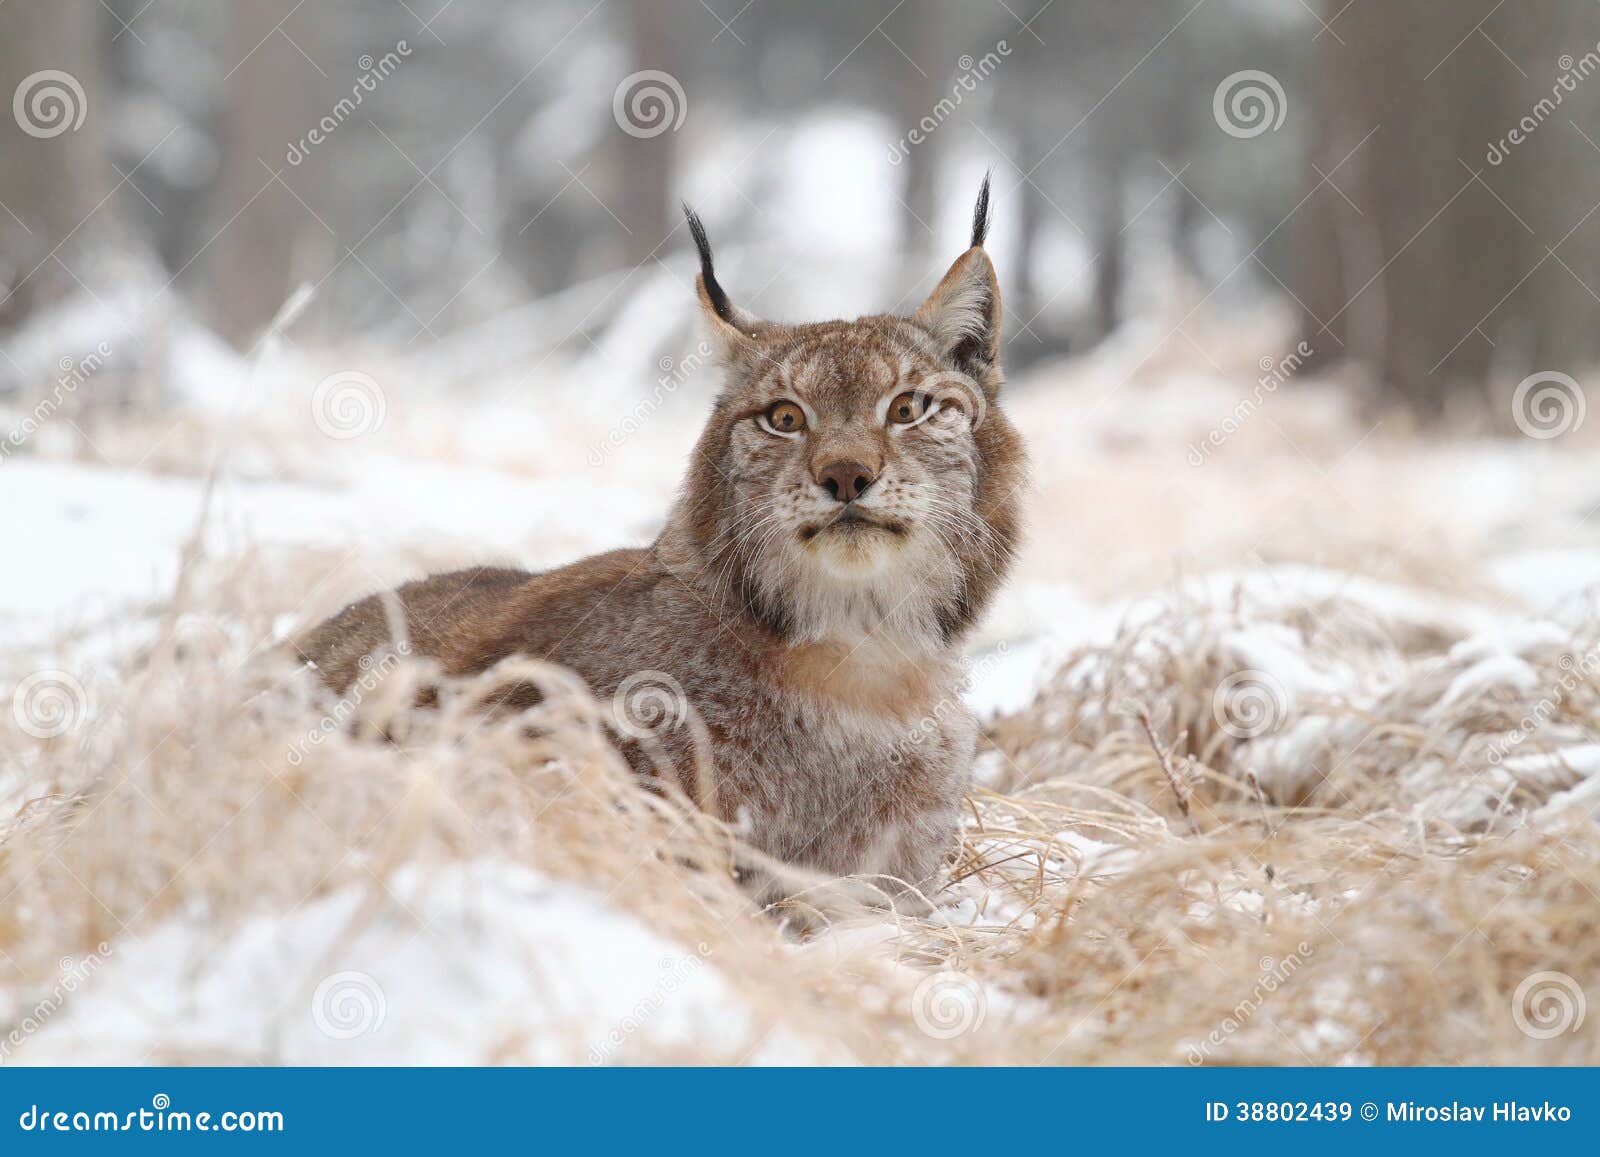 Lynx relaxing stock image. Image of nature, lynx, feline - 38802439